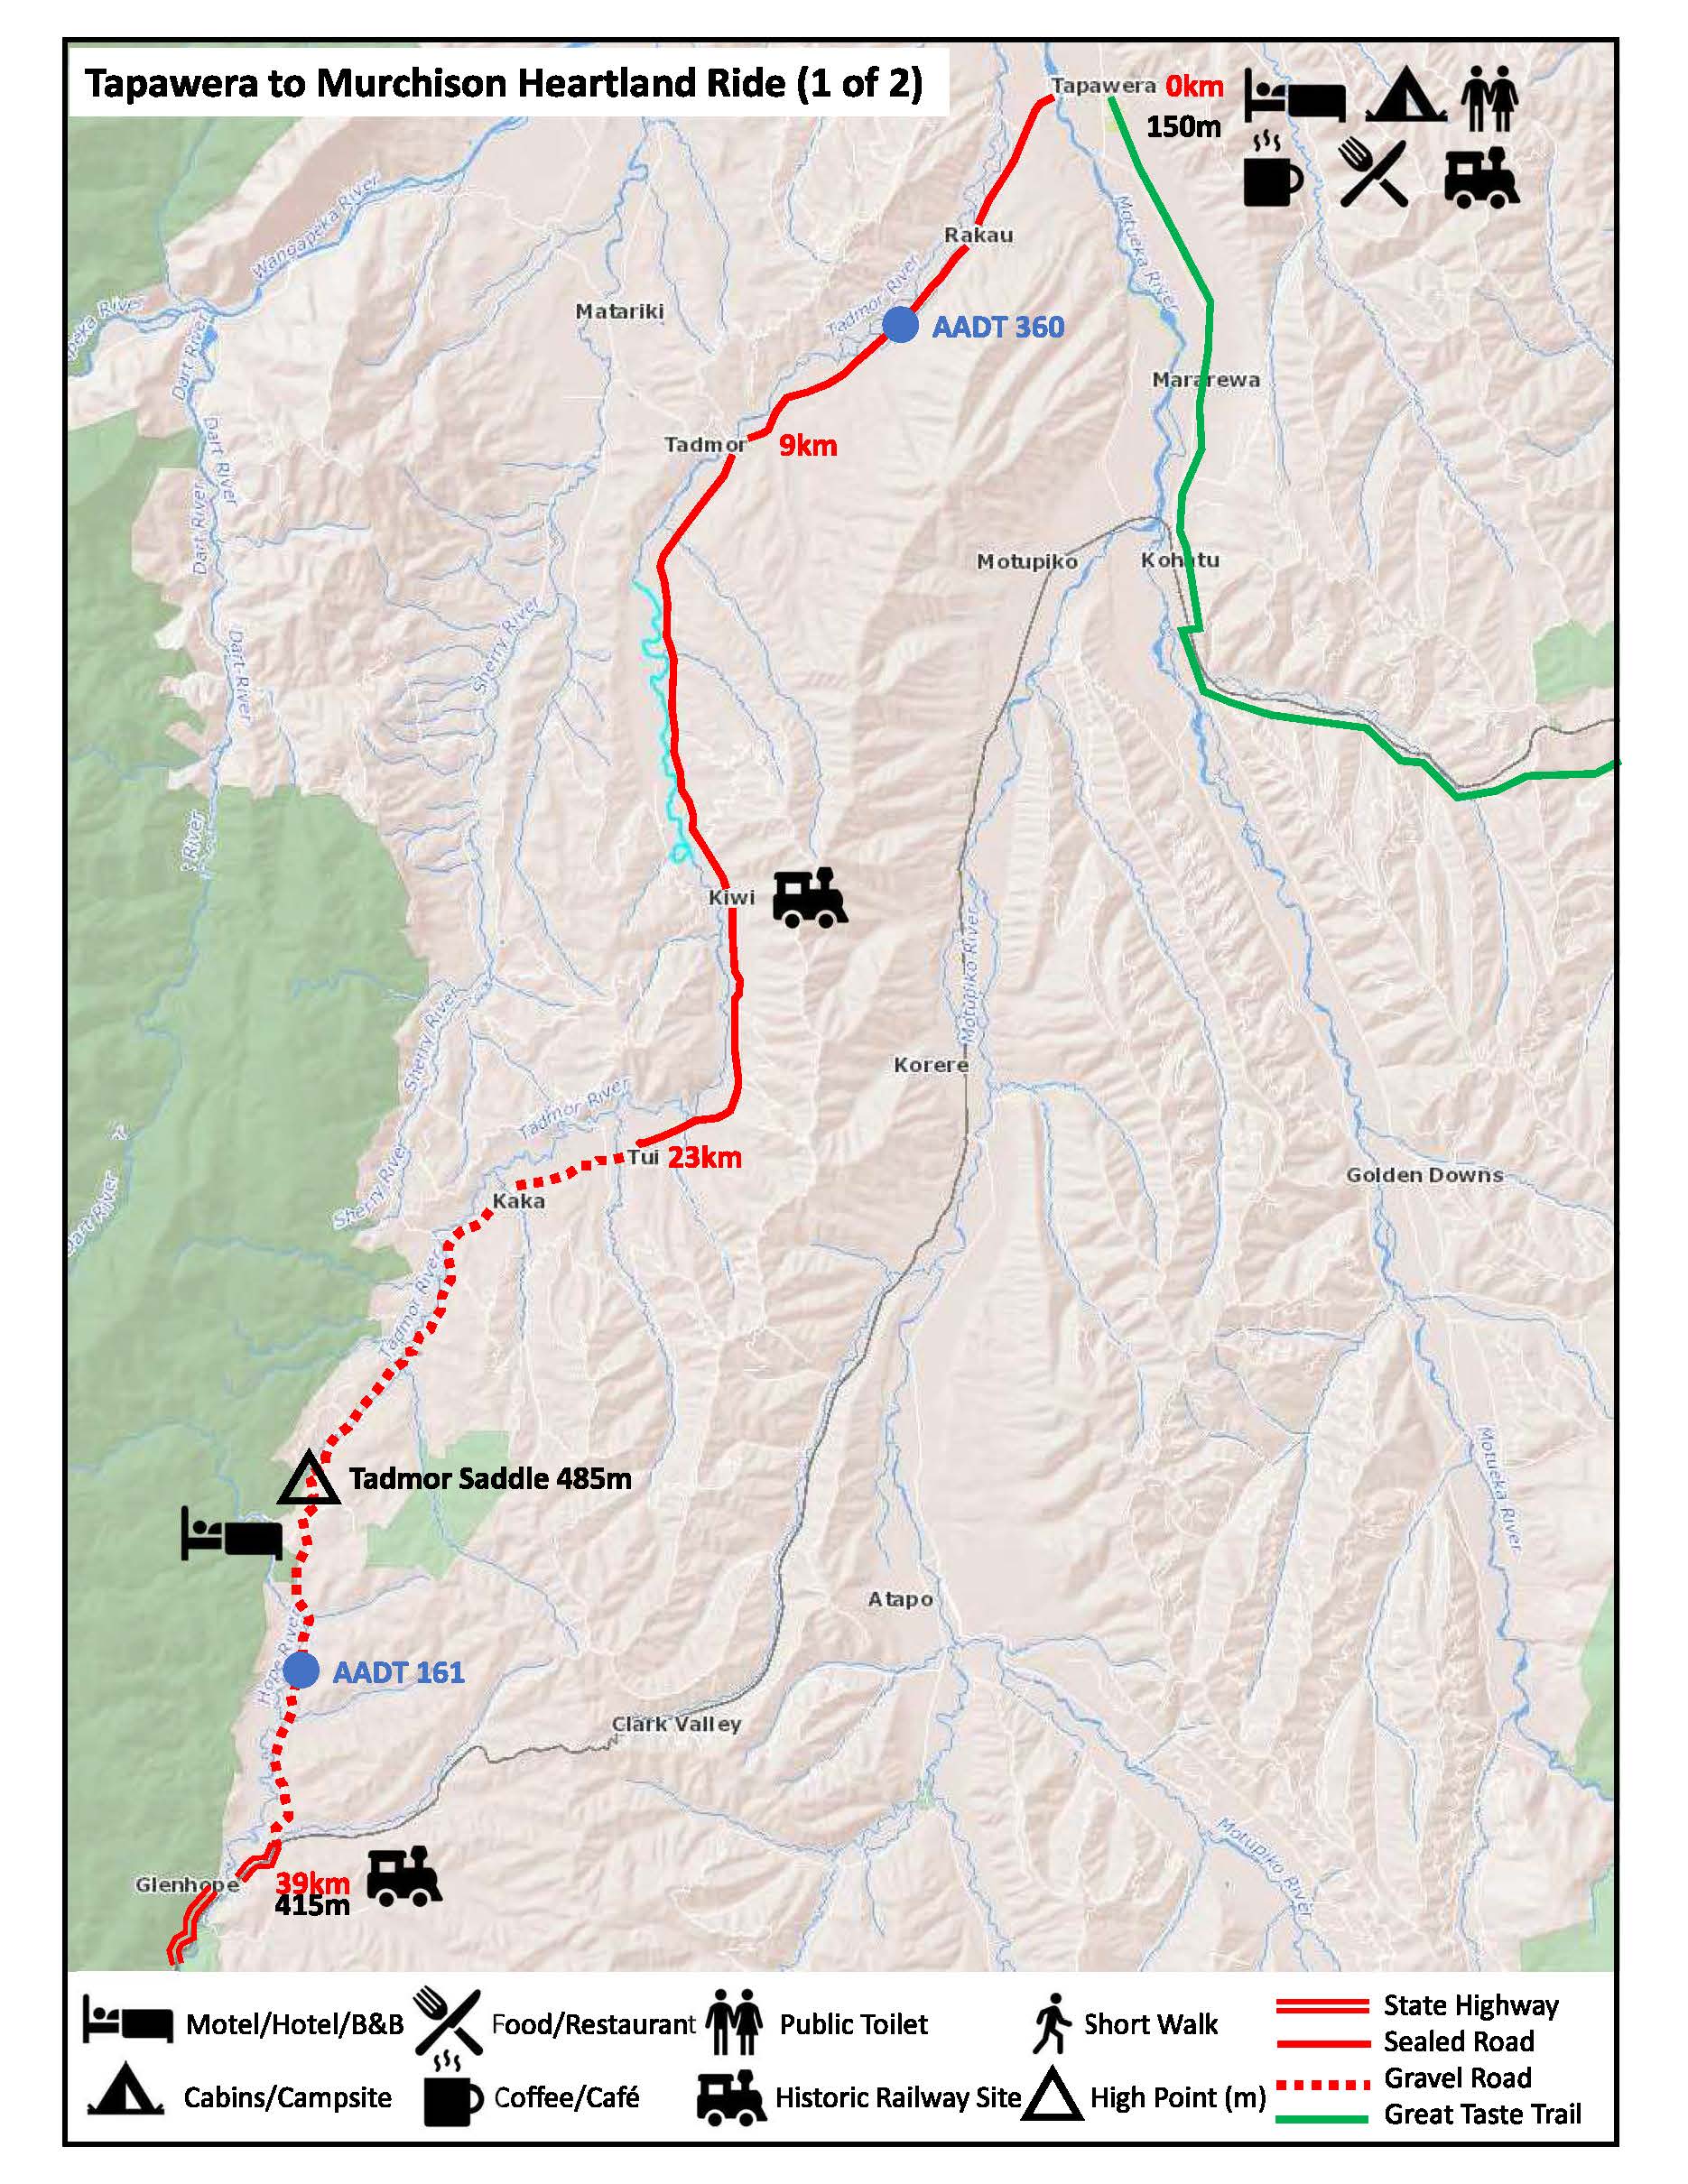 Tapawera to Murchison Heartland Ride Profile Map